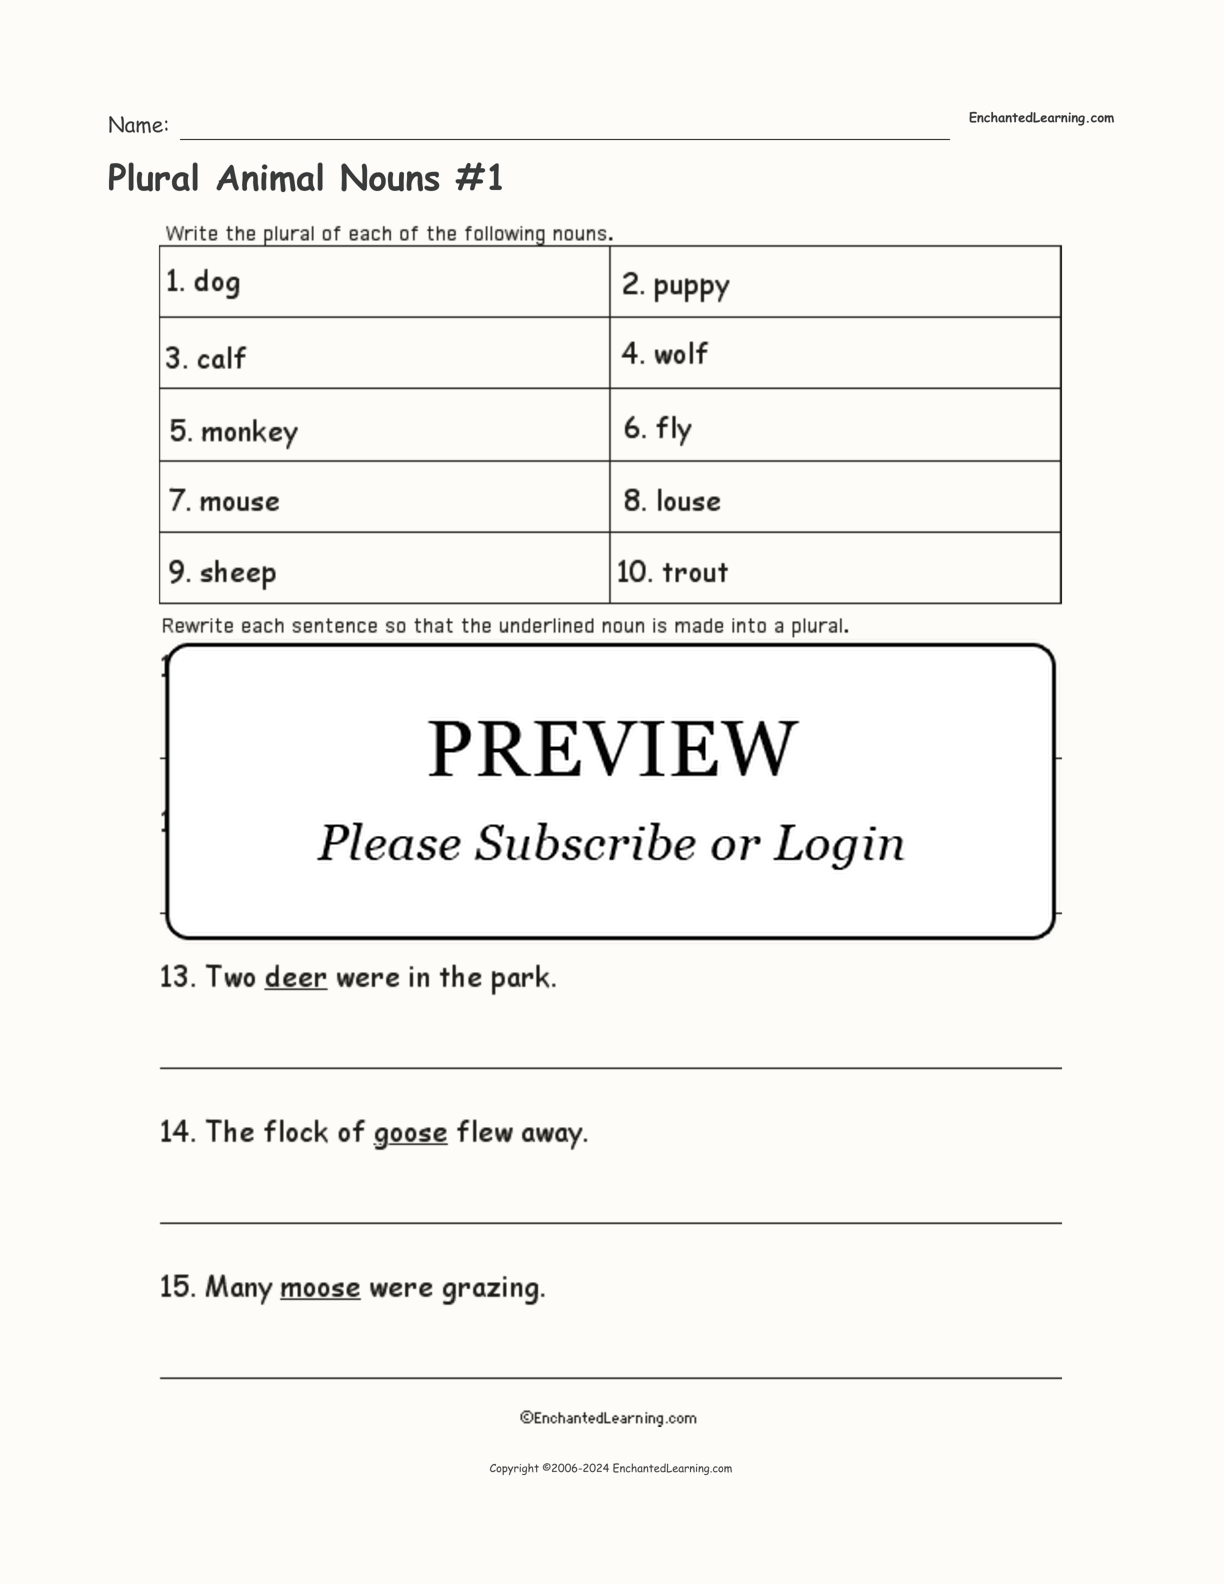 Plural Animal Nouns #1 interactive worksheet page 1